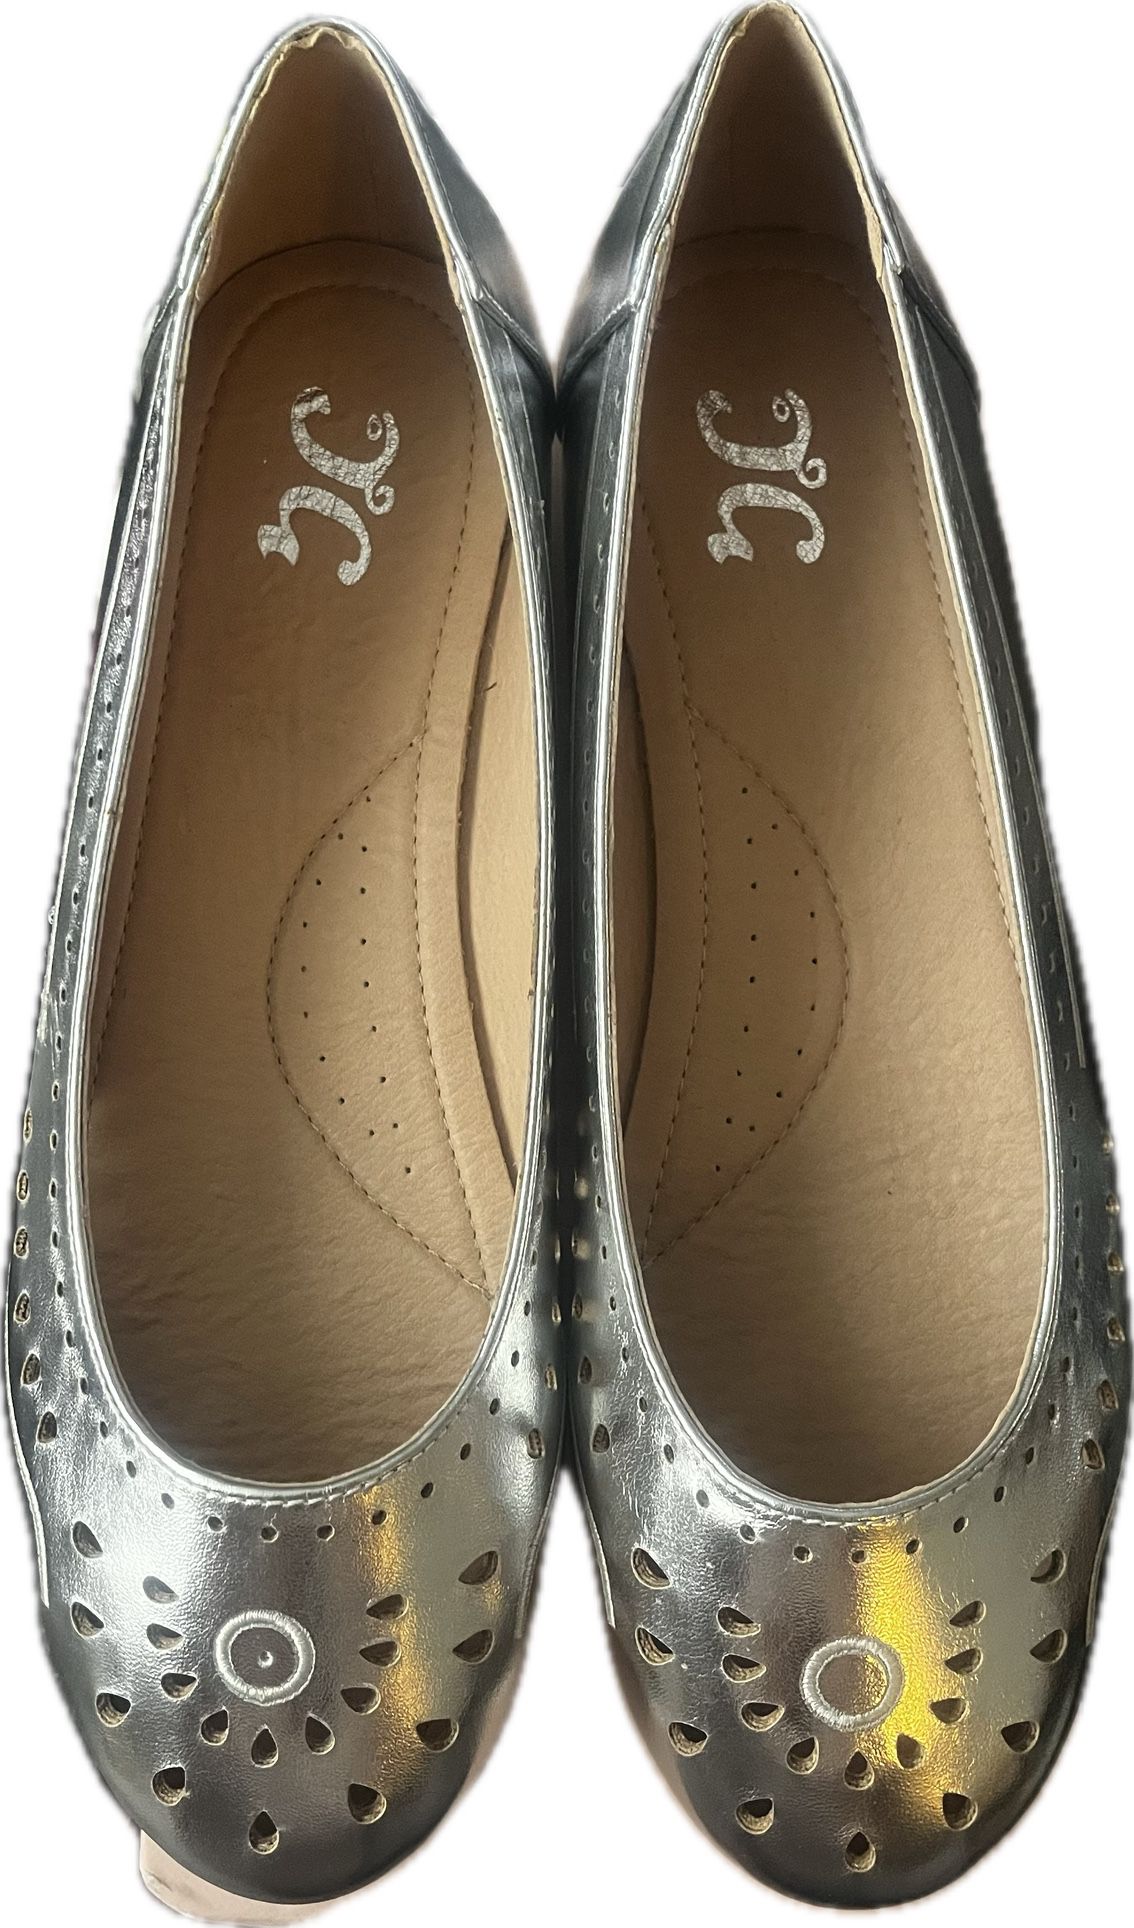 Women’s Journee Collection Women’s Silver Metallic Flats Shoes 9 M New